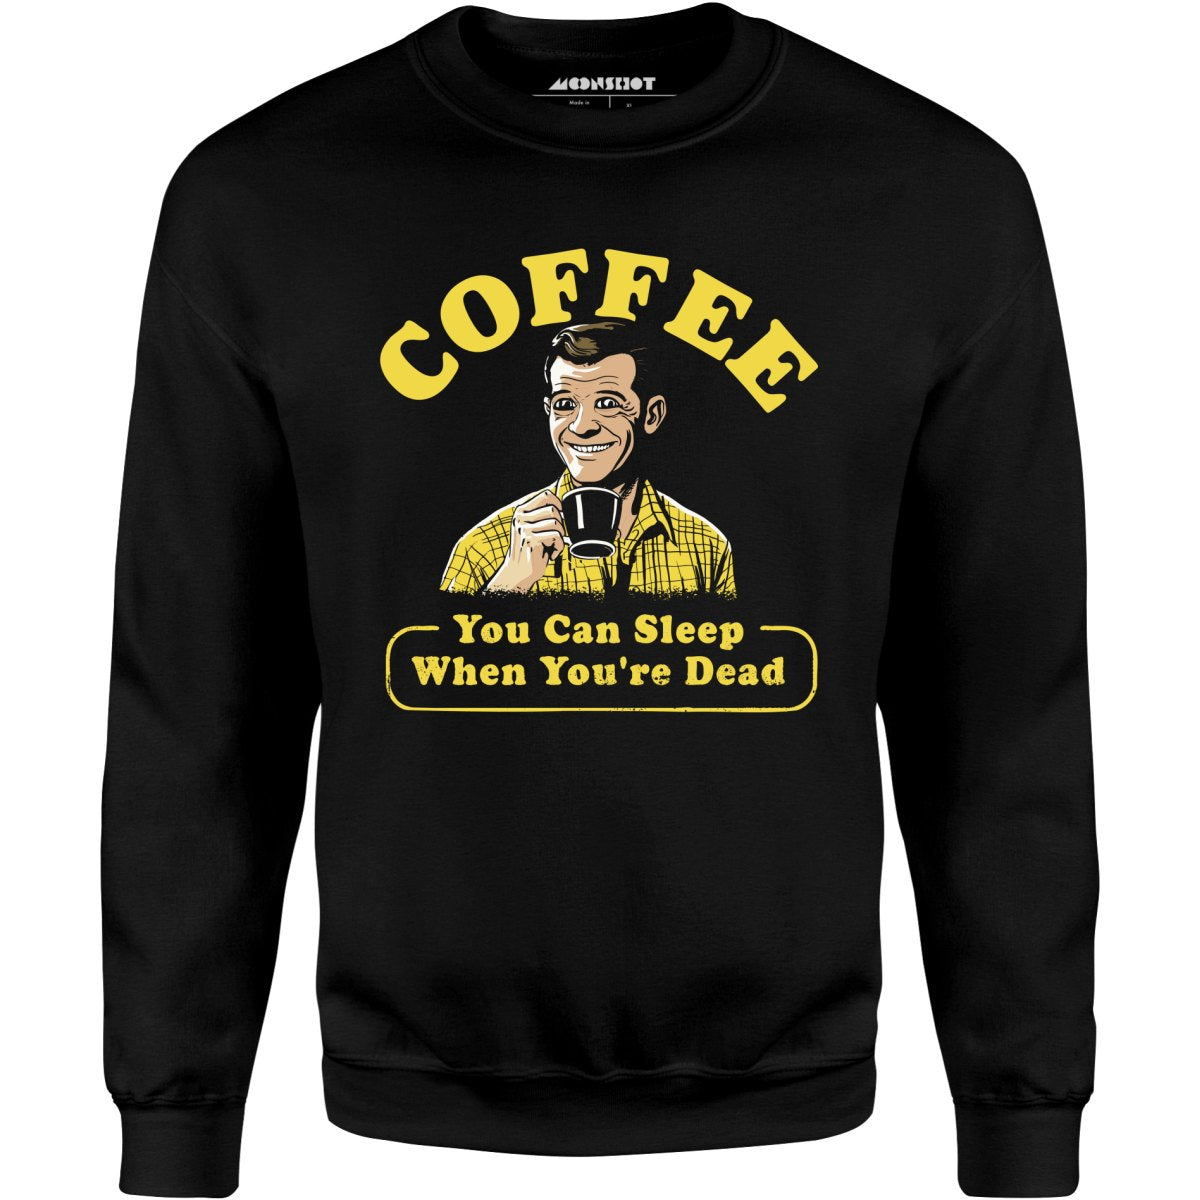 Coffee - You Can Sleep When You're Dead - Unisex Sweatshirt